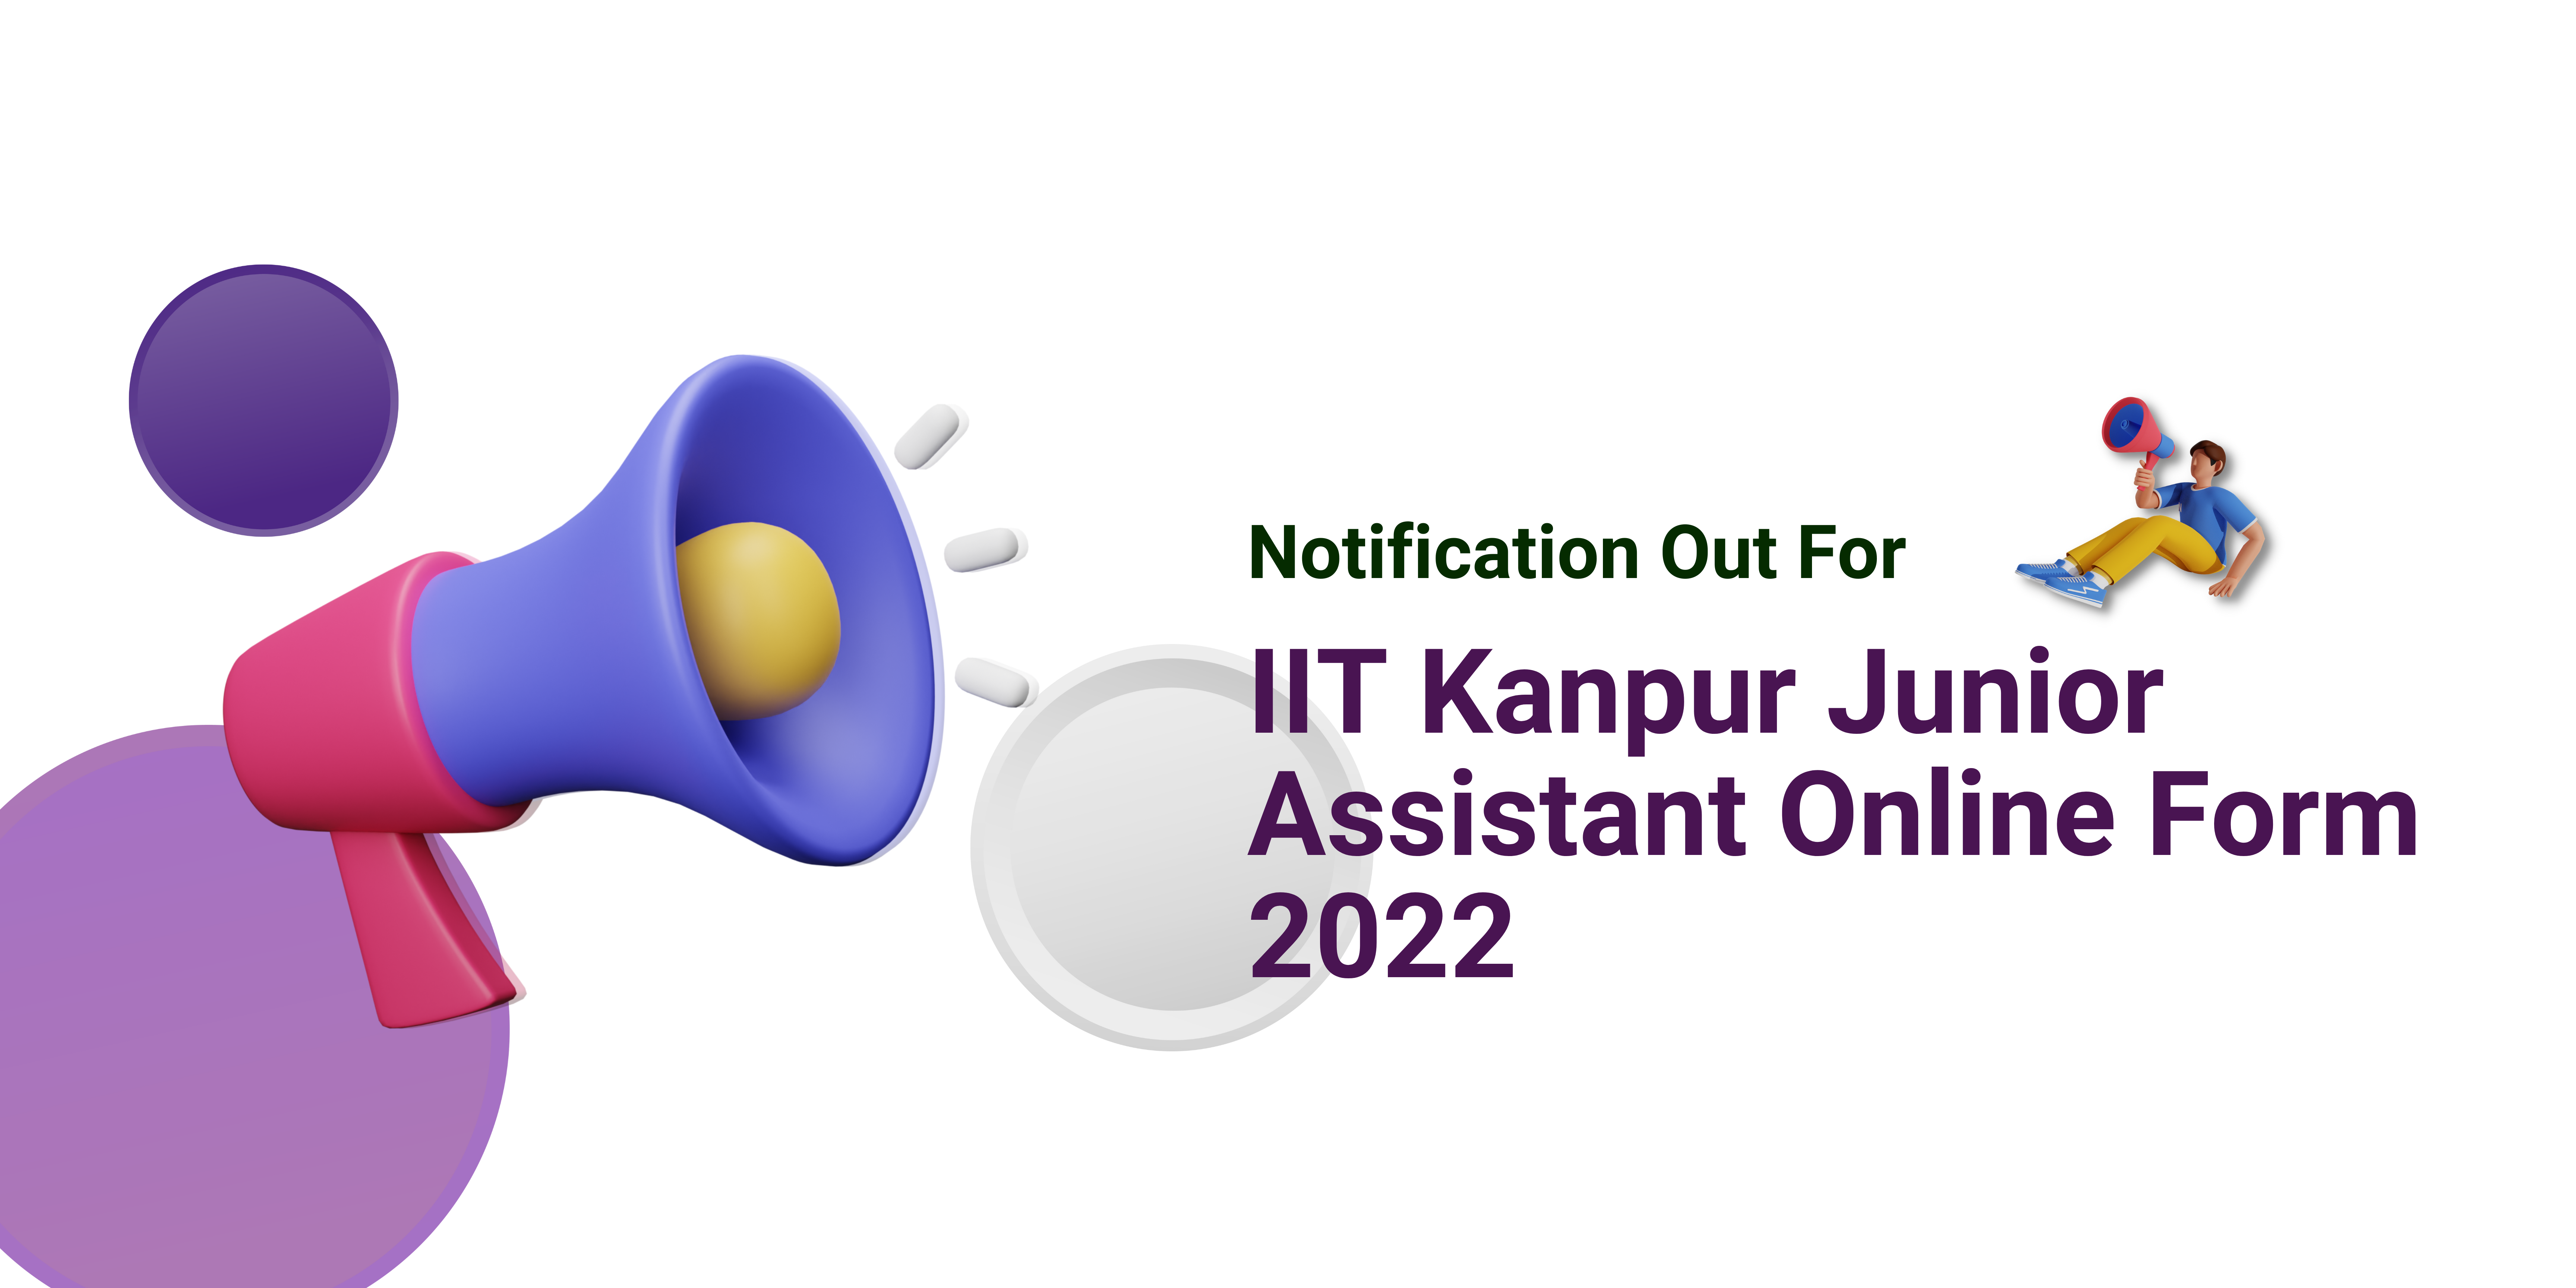 IIT Kanpur Junior Assistant Online Form 2022